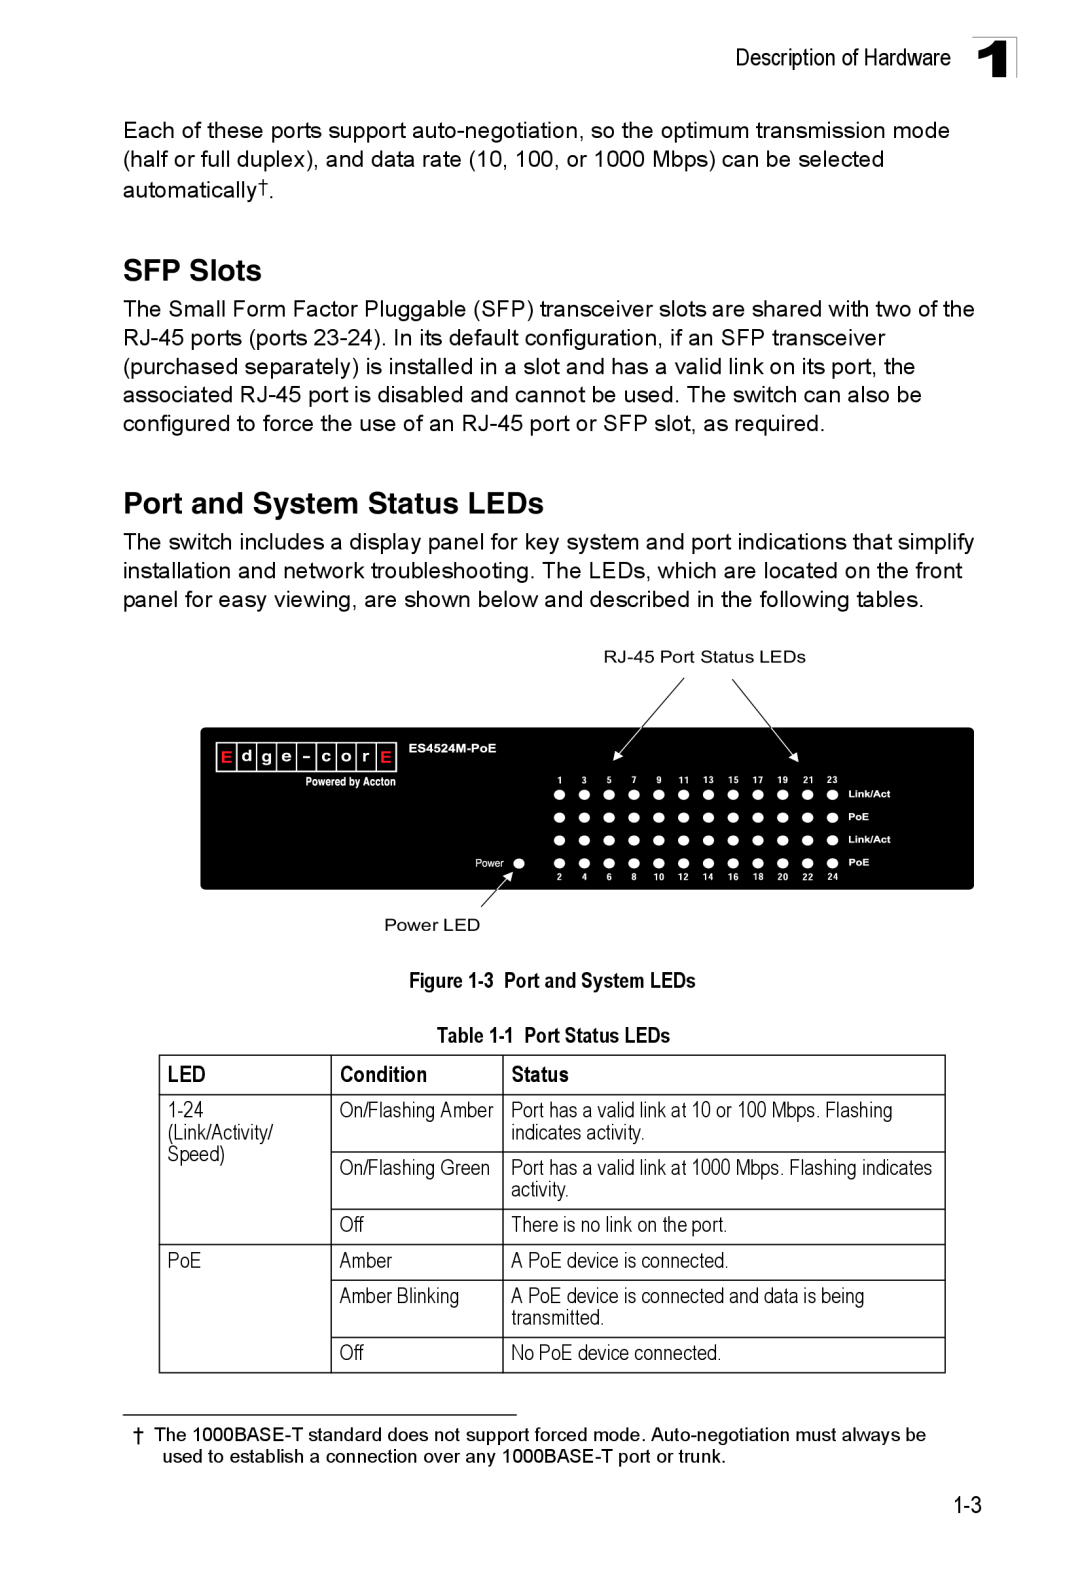 Accton Technology ES4524M-POE manual SFP Slots, Port and System Status LEDs, 3 Port and System LEDs -1 Port Status LEDs 